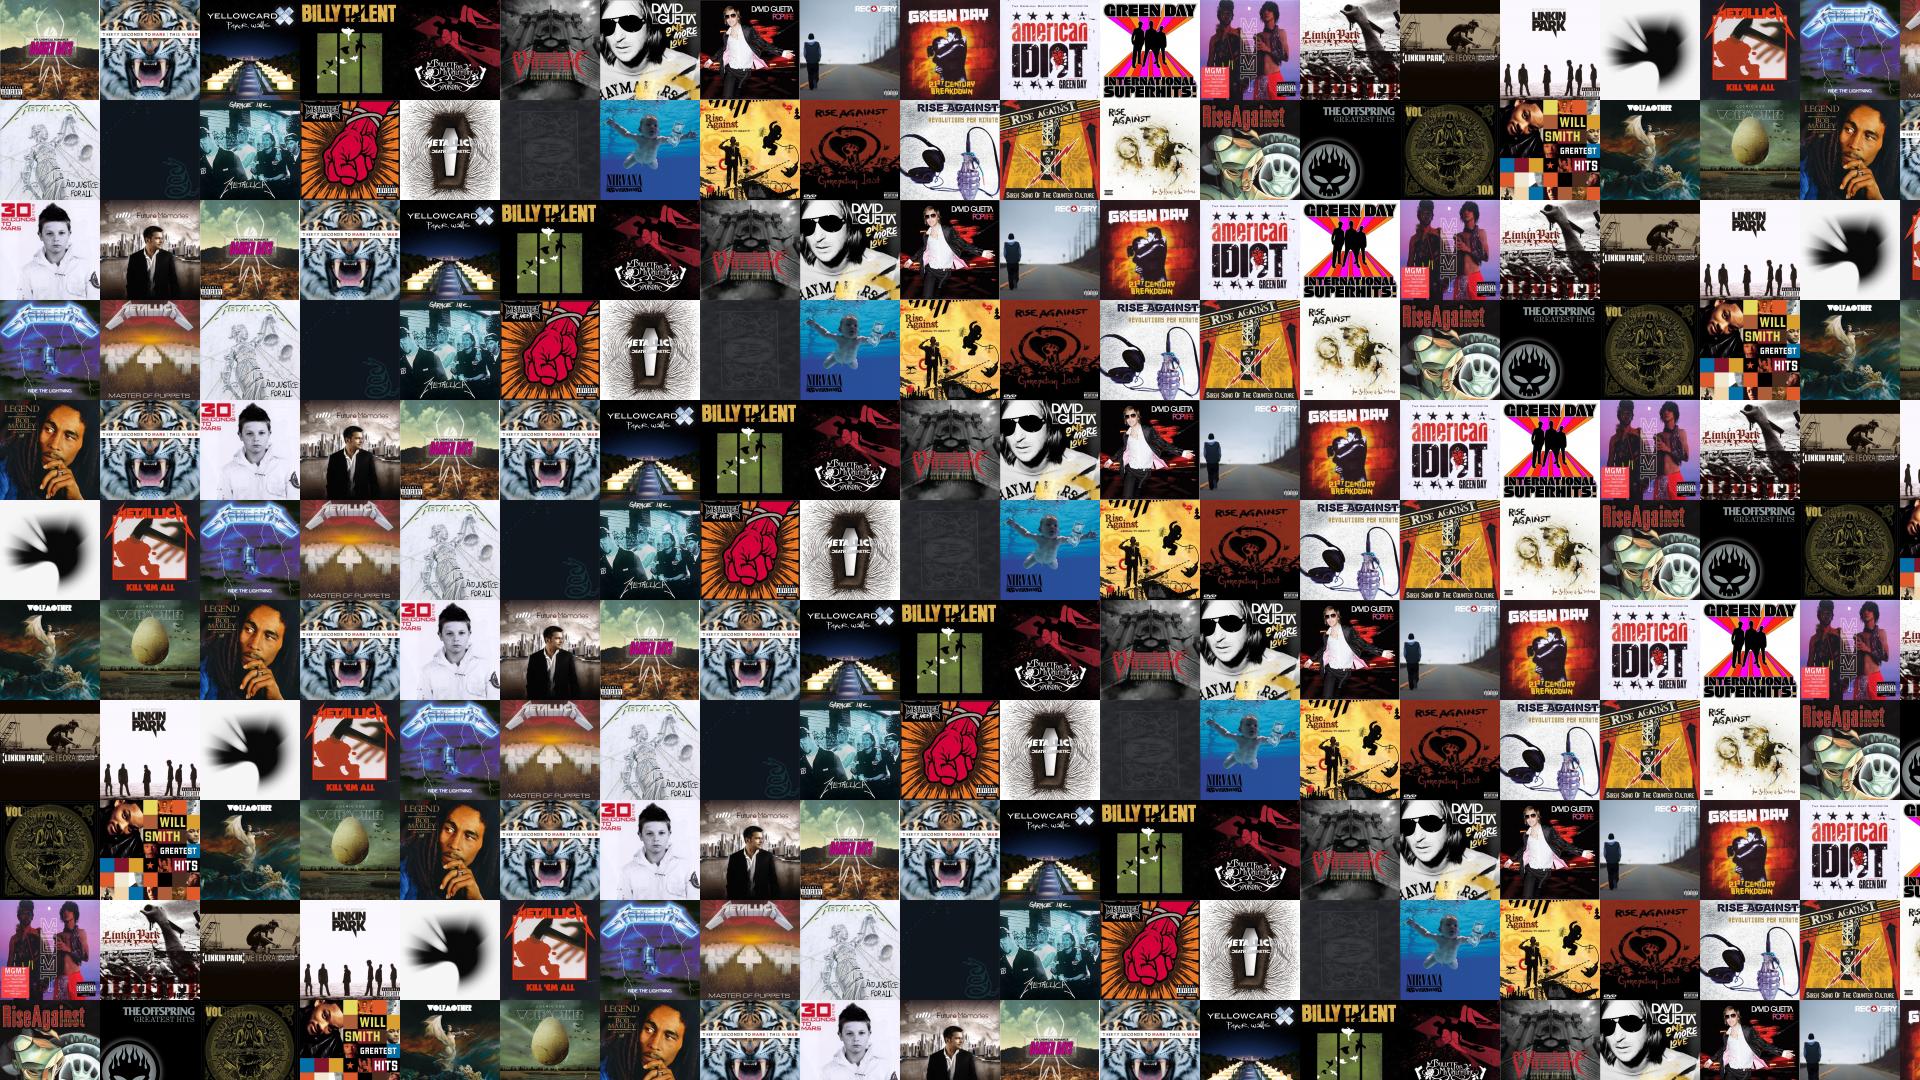 Eminem Album Cover Wallpaper